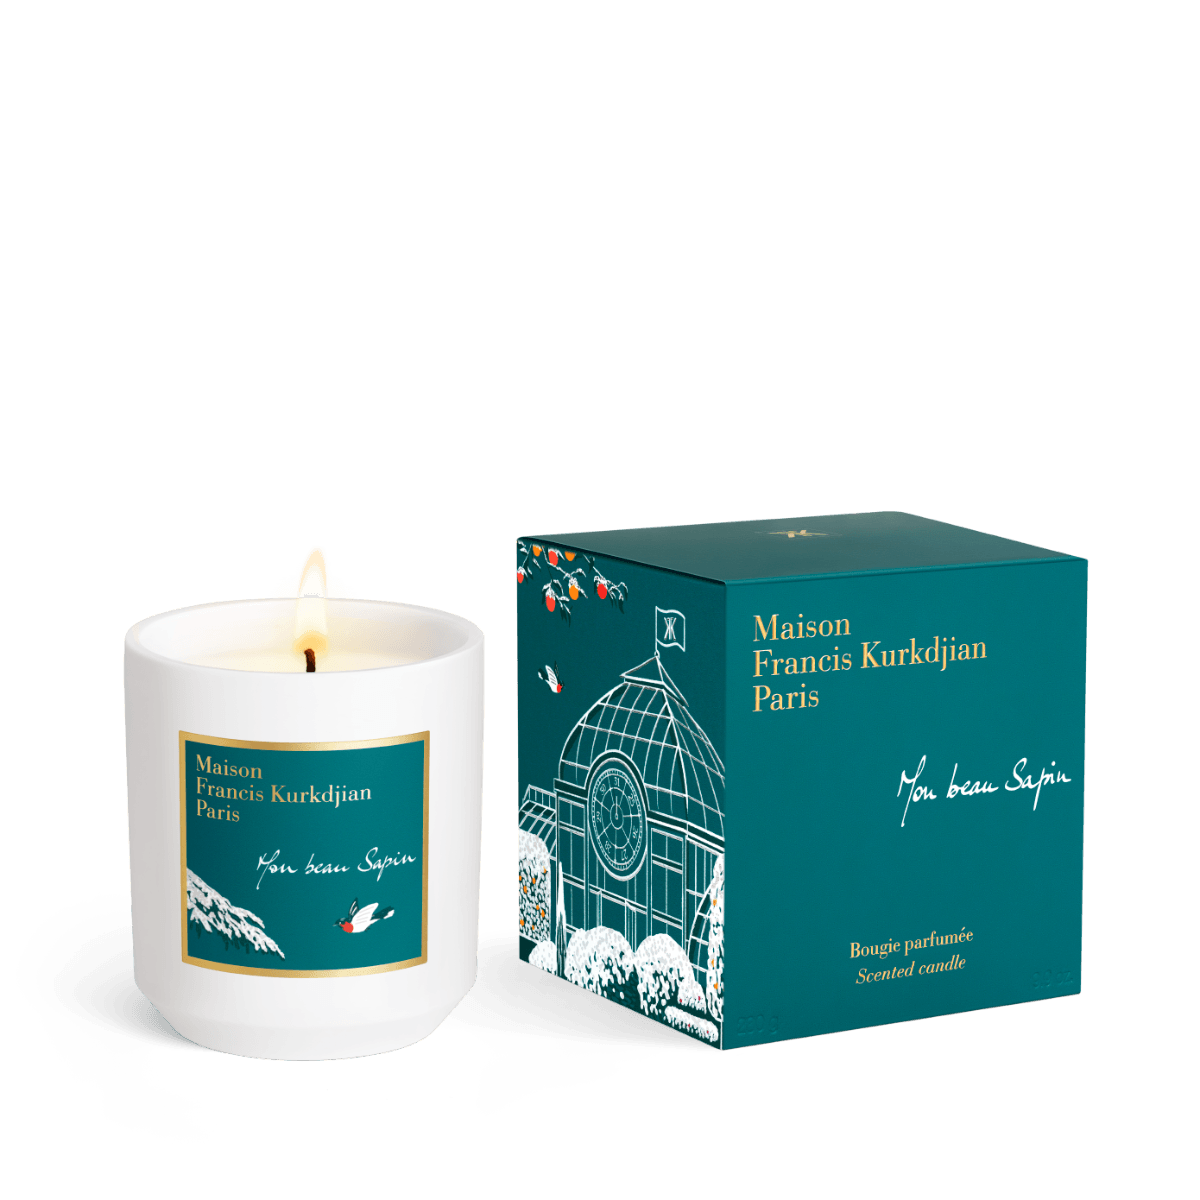 Image of Mon beau Sapin scented candle by the perfume brand Maison Francis Kurkdjian